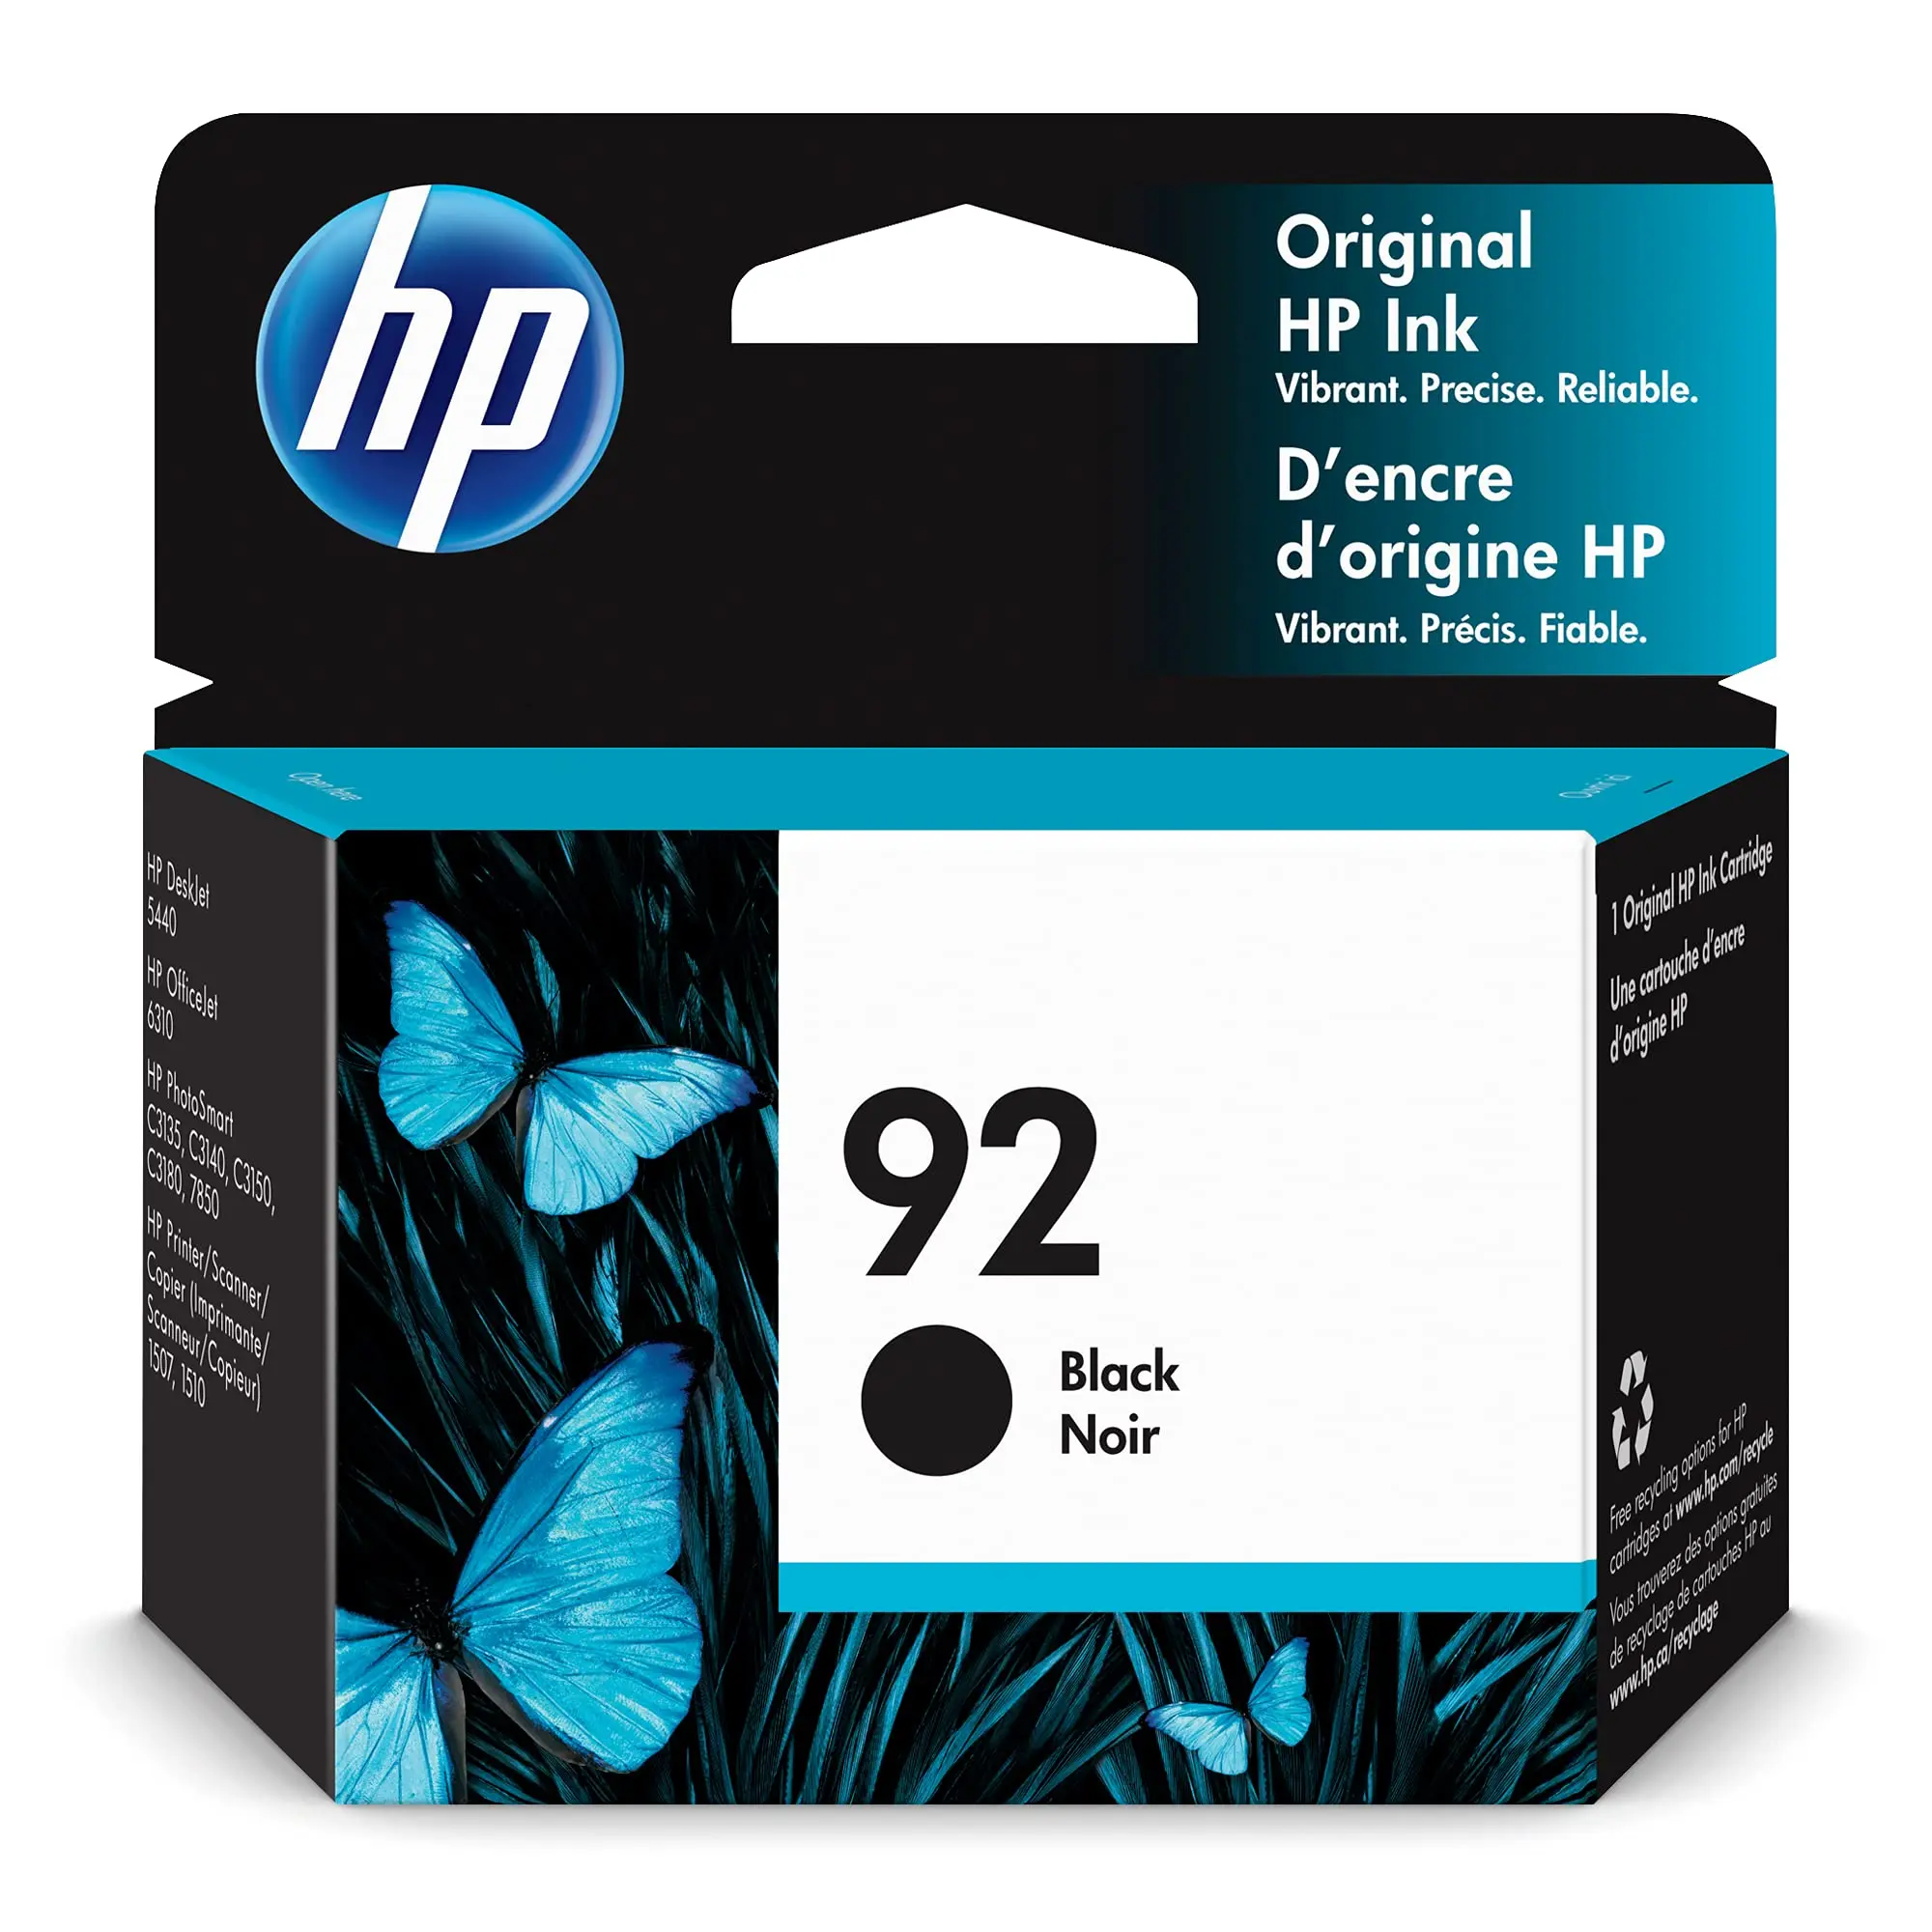 hewlett packard ink cartridges 92 93 - What printer does HP 92 fit